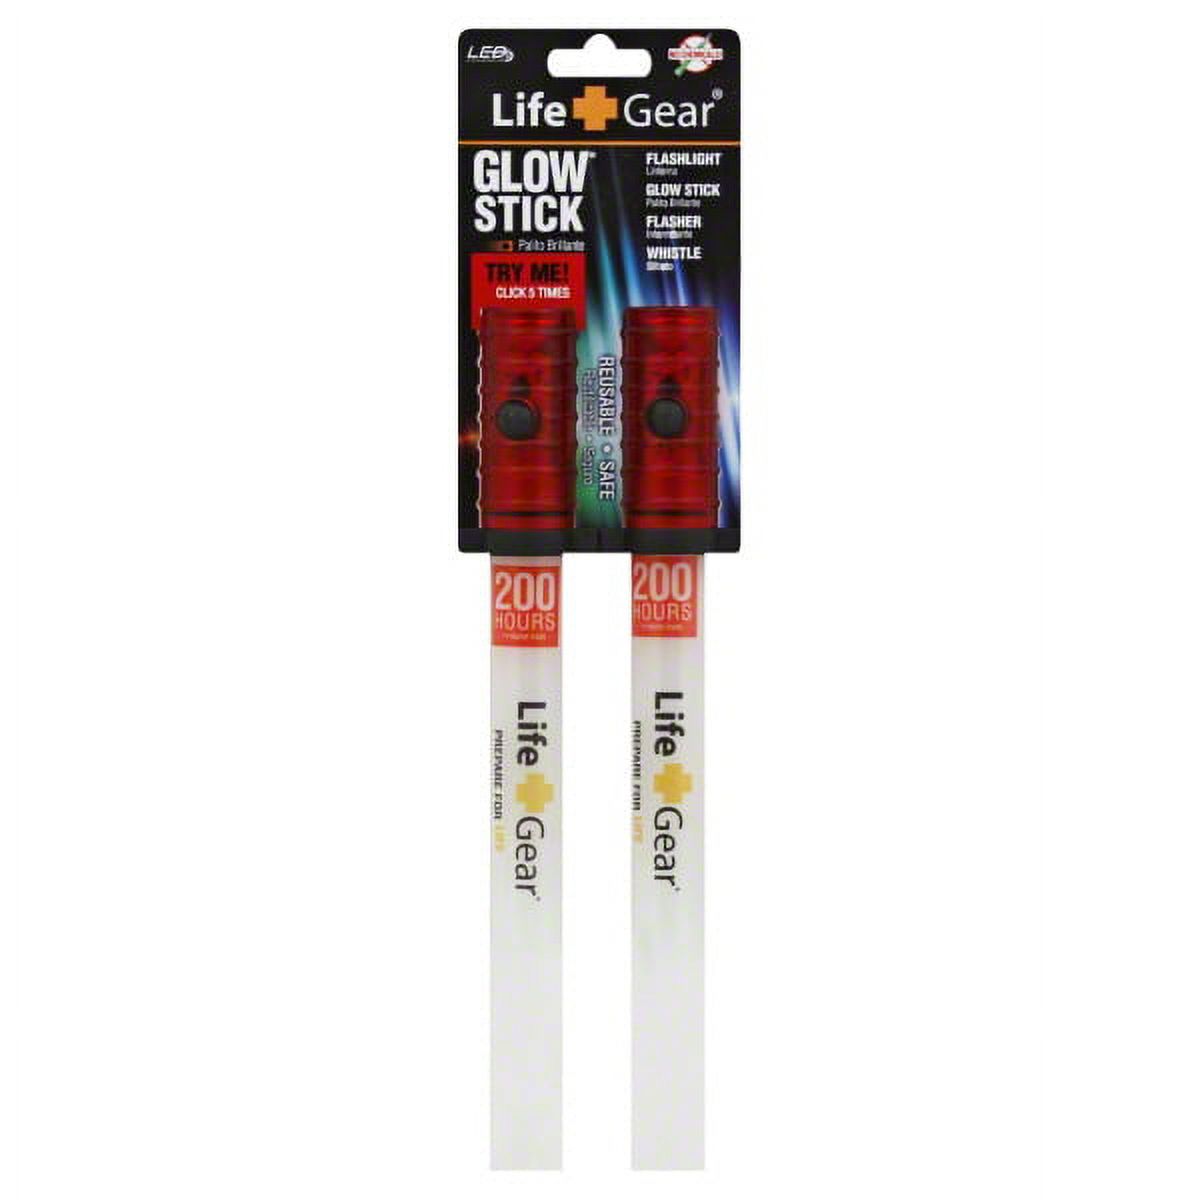 Life Gear Advanced Glow Series Flashlight + Glow Stick 2PK LED Emergency Whistle - image 1 of 2